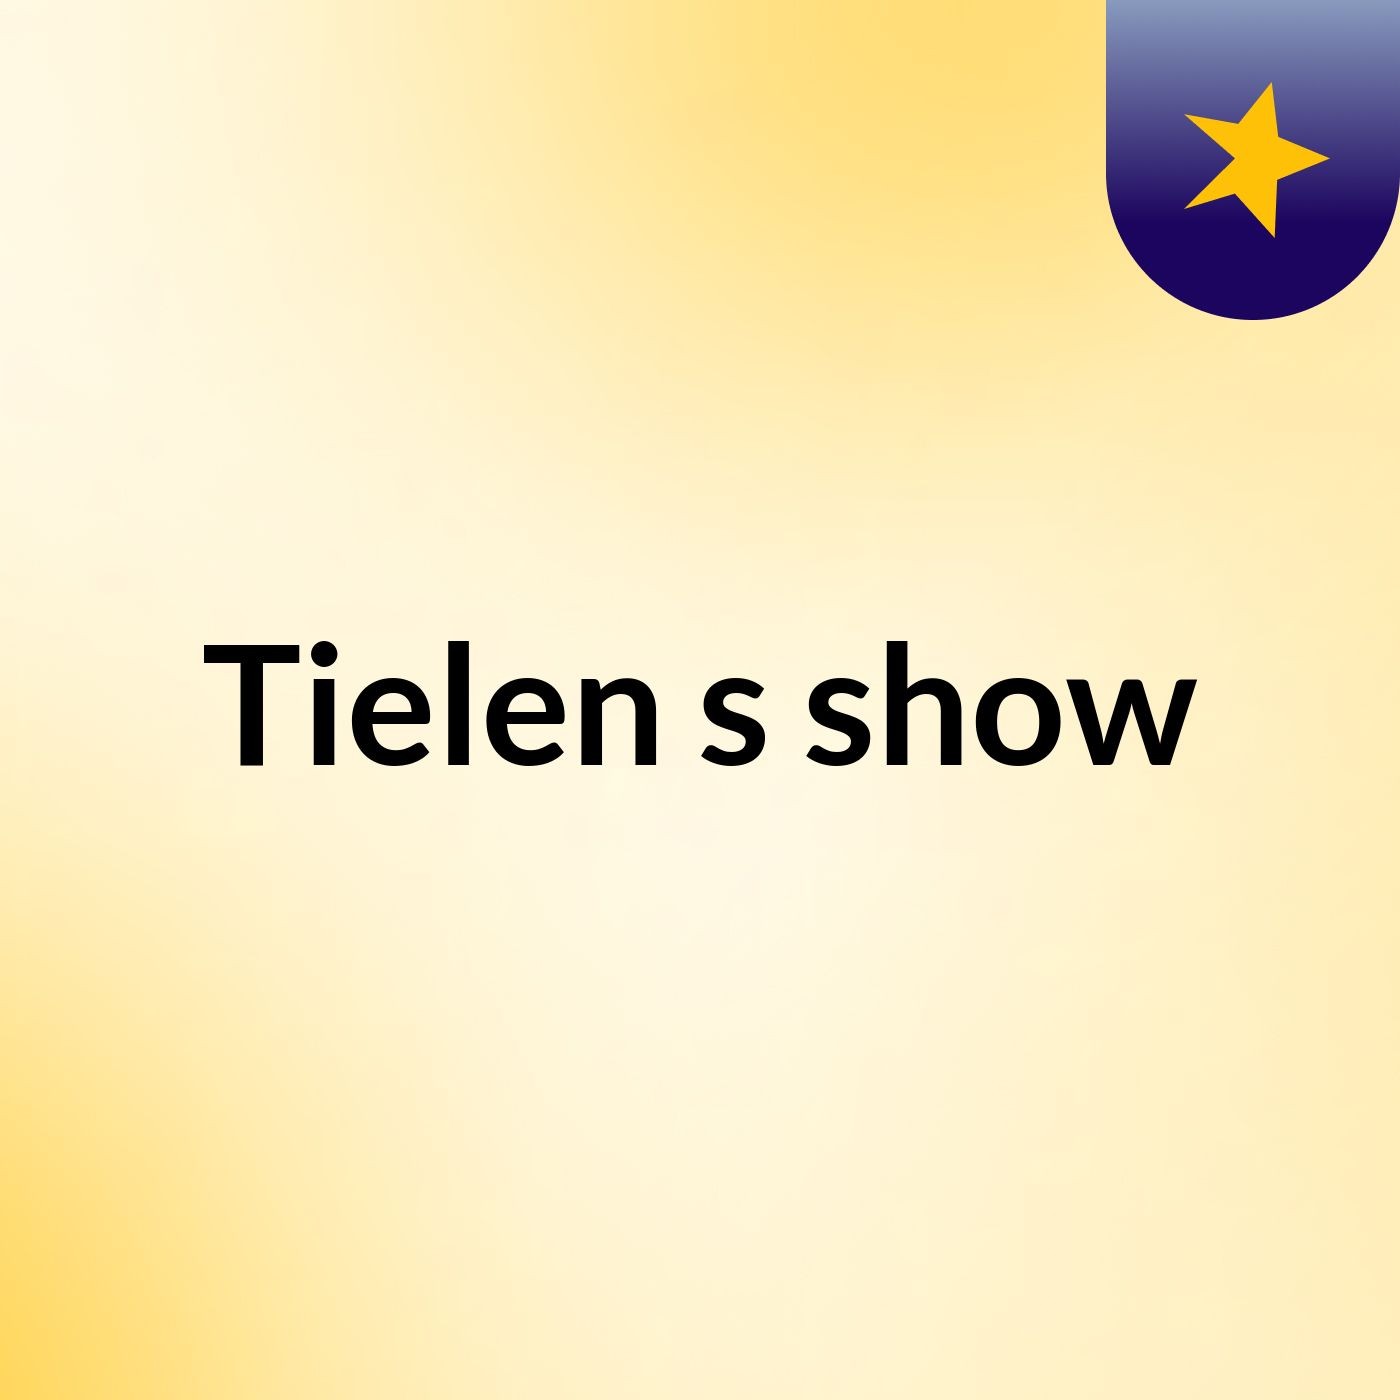 Tielen's show